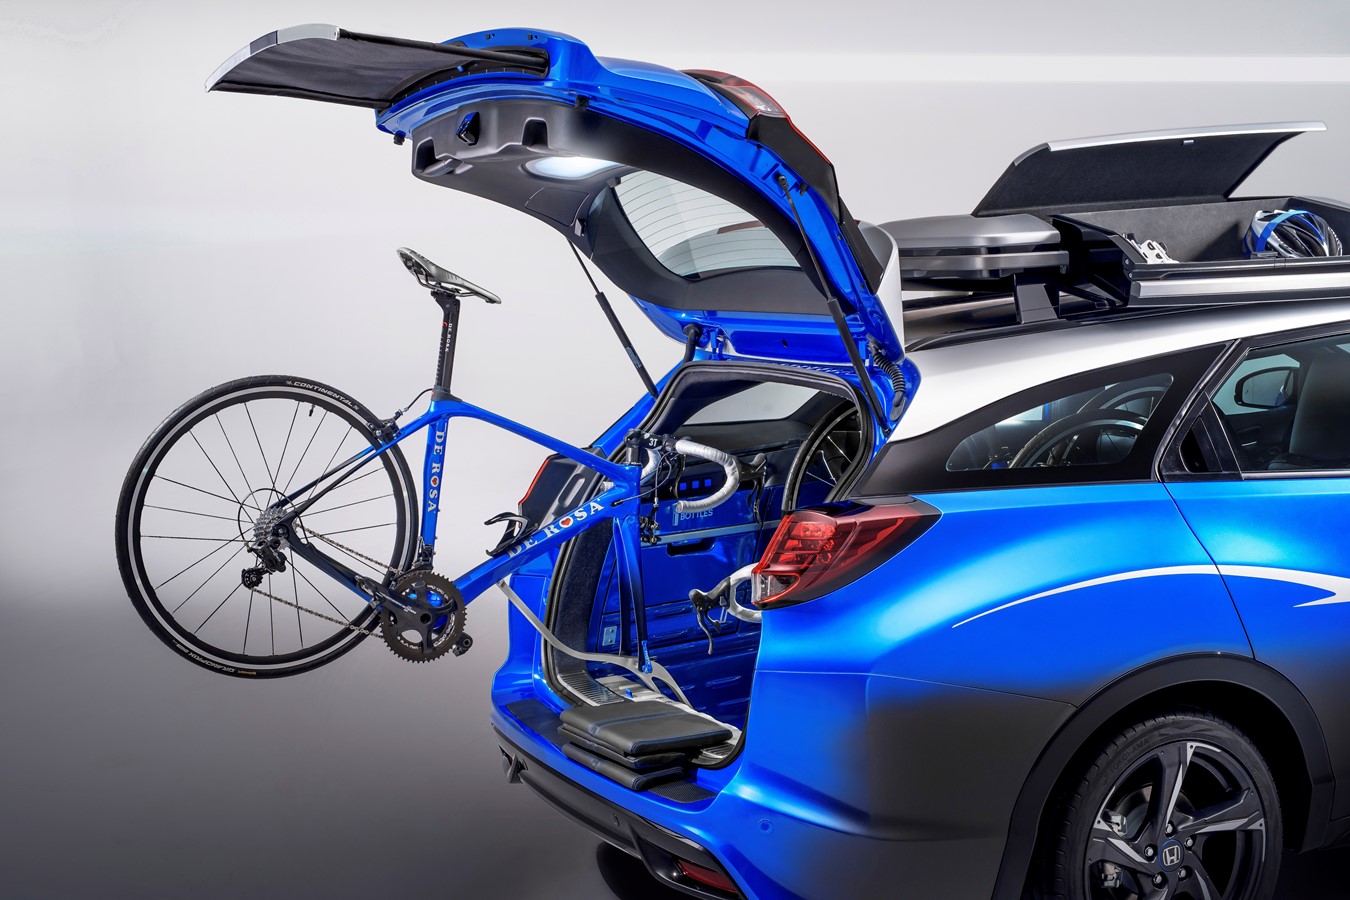 Honda to showcase the Civic Tourer Active Life Concept at 2015 Frankfurt Motor Show